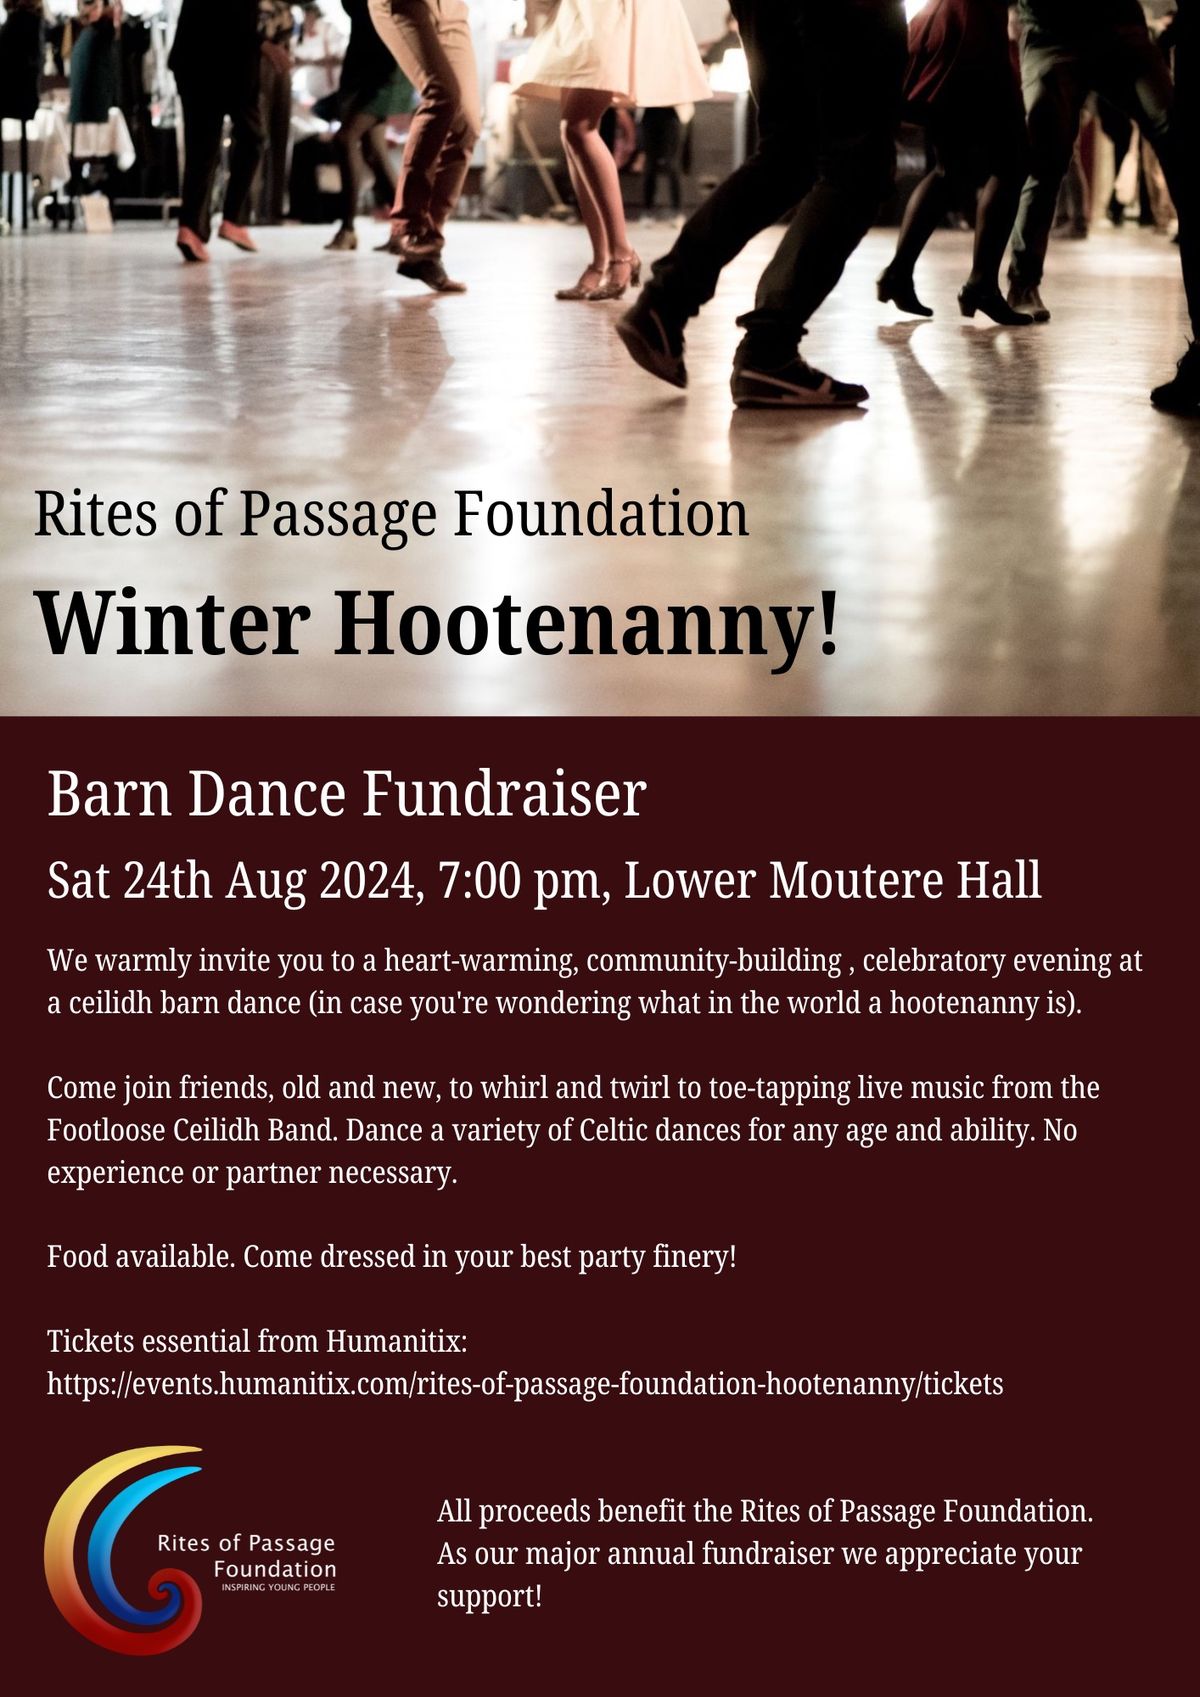 Winter Hootenanny Fundraiser